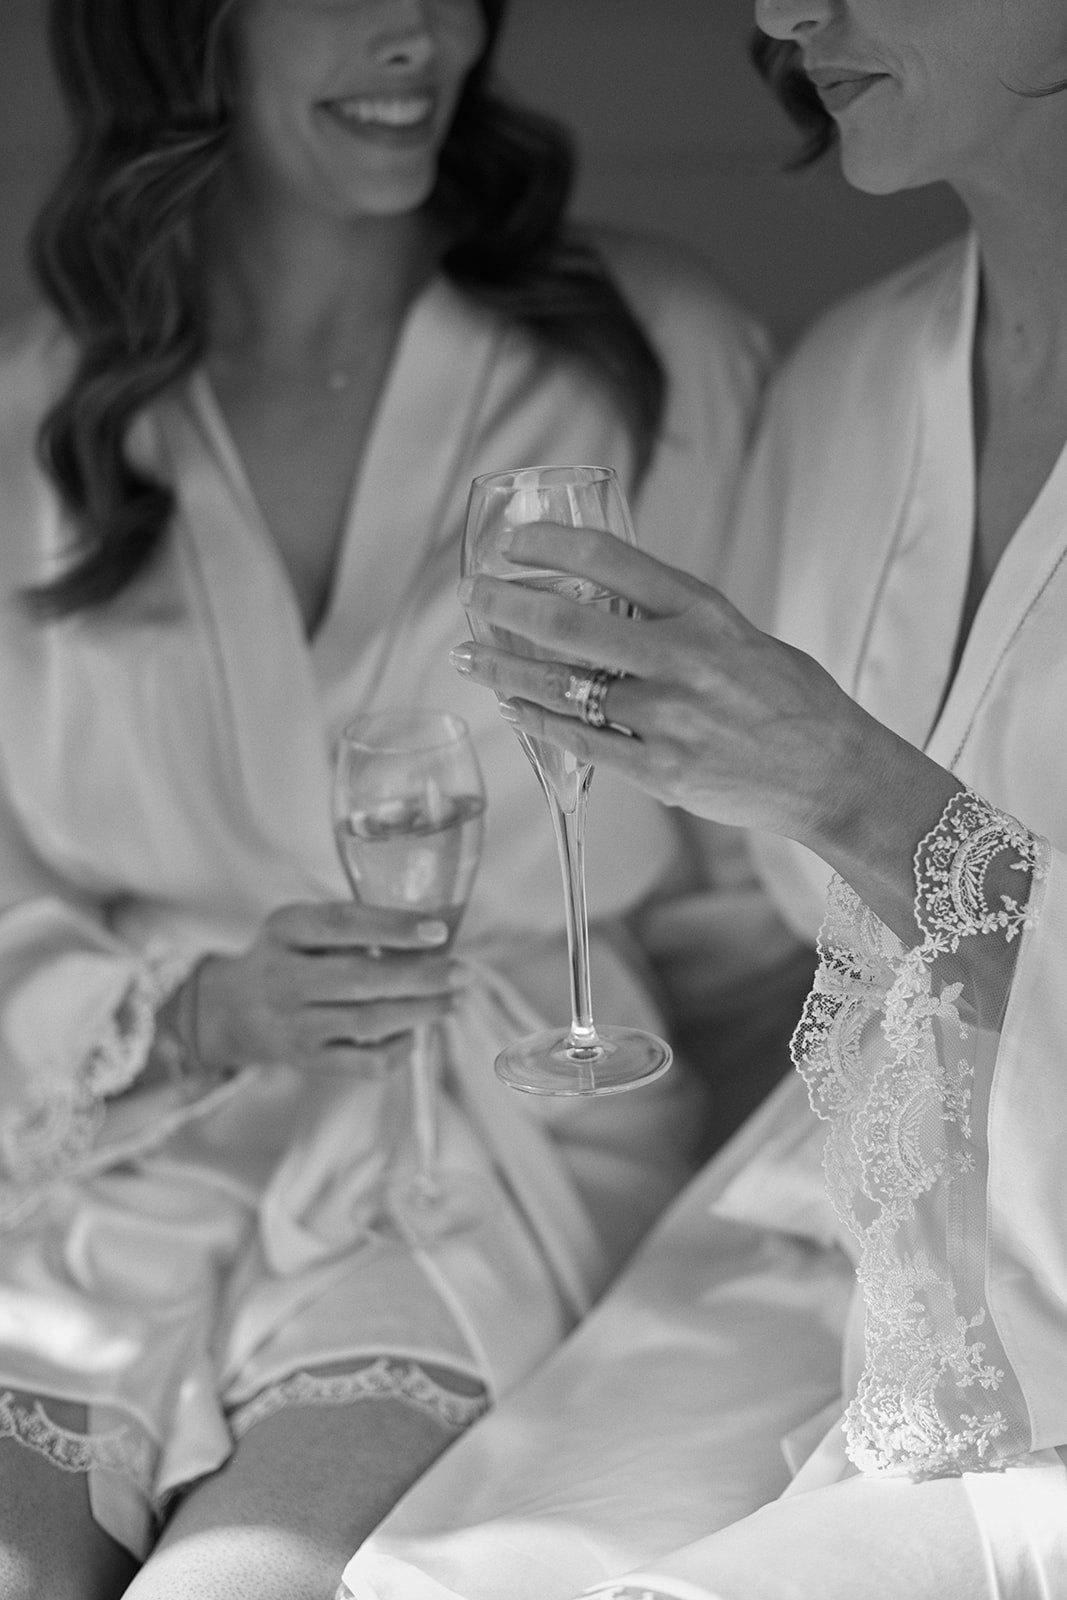 Ladies holding champagne glasses